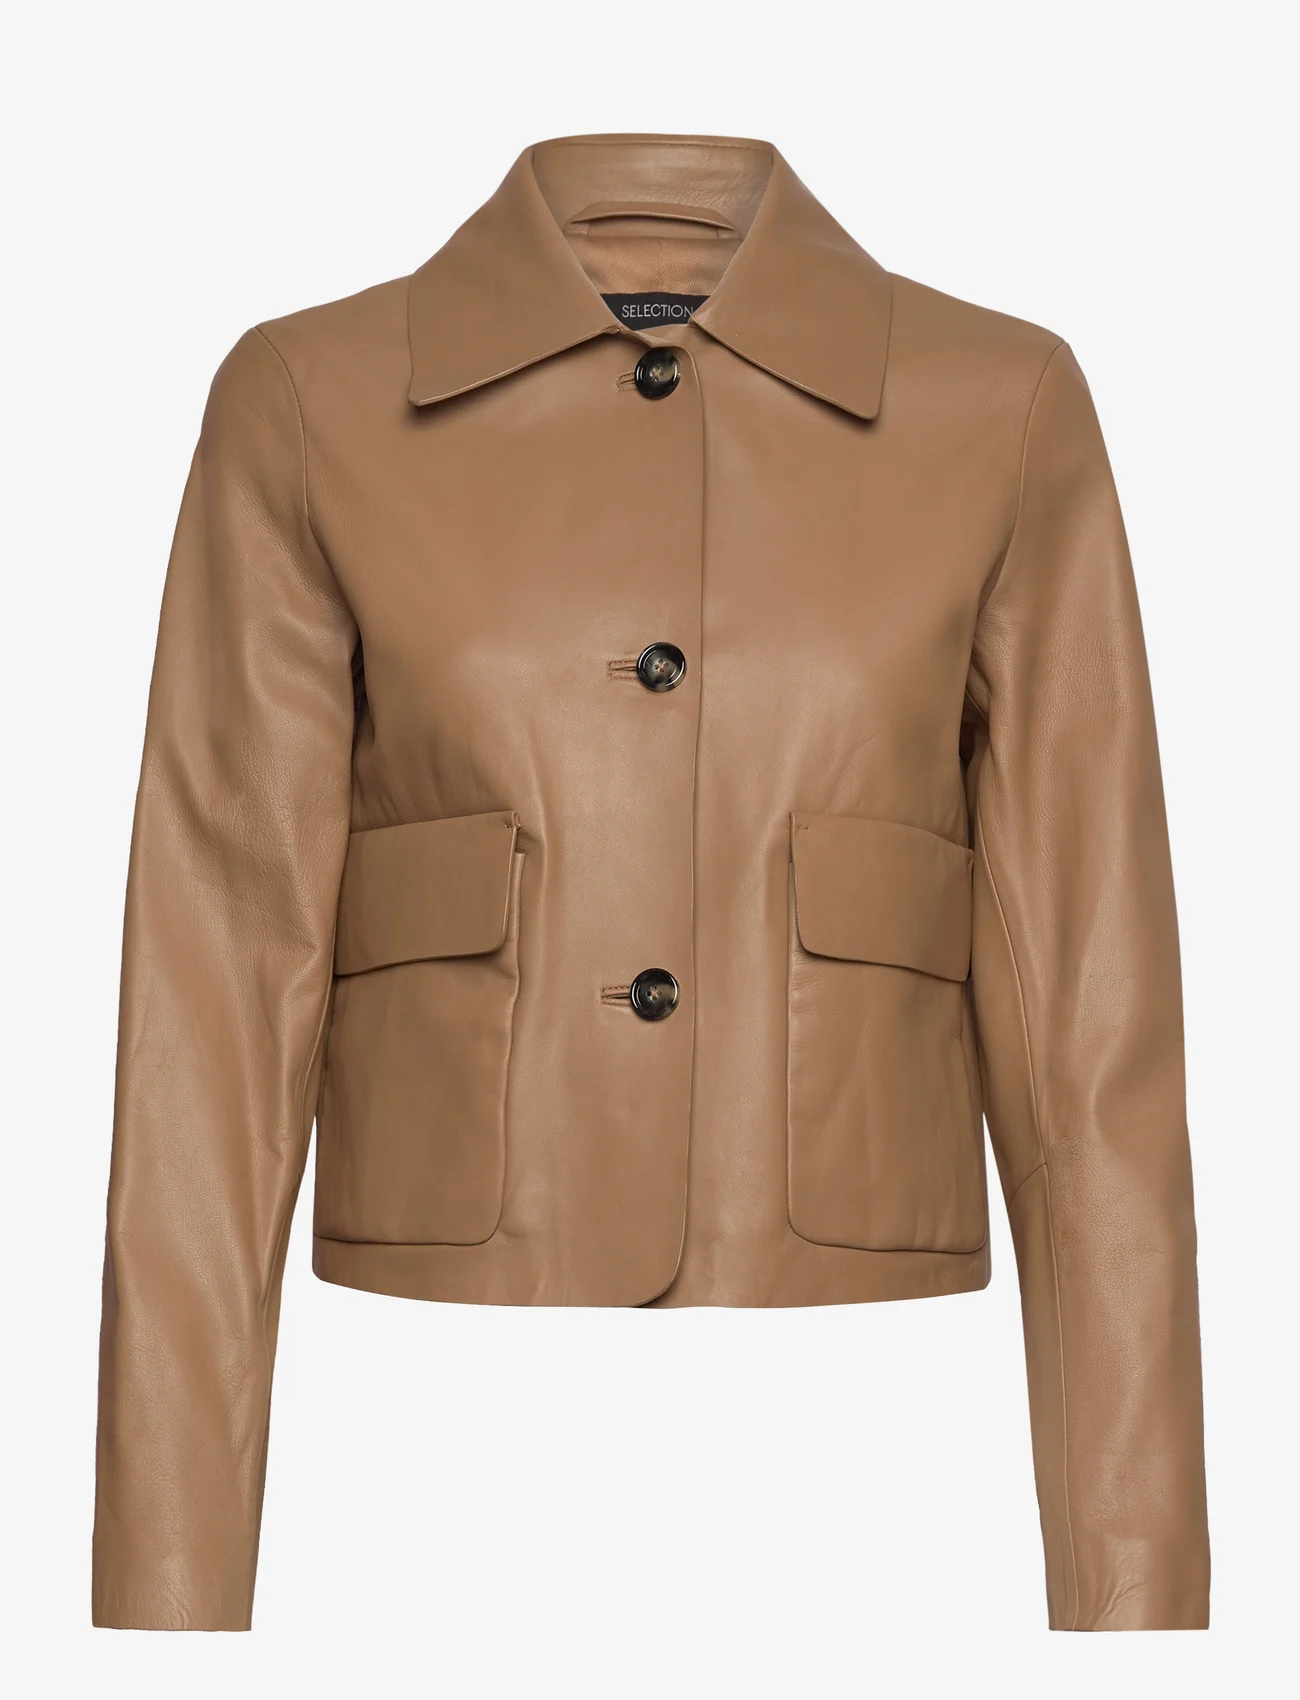 Mango - 100% leather jacket with buttons - vårjakker - medium brown - 0